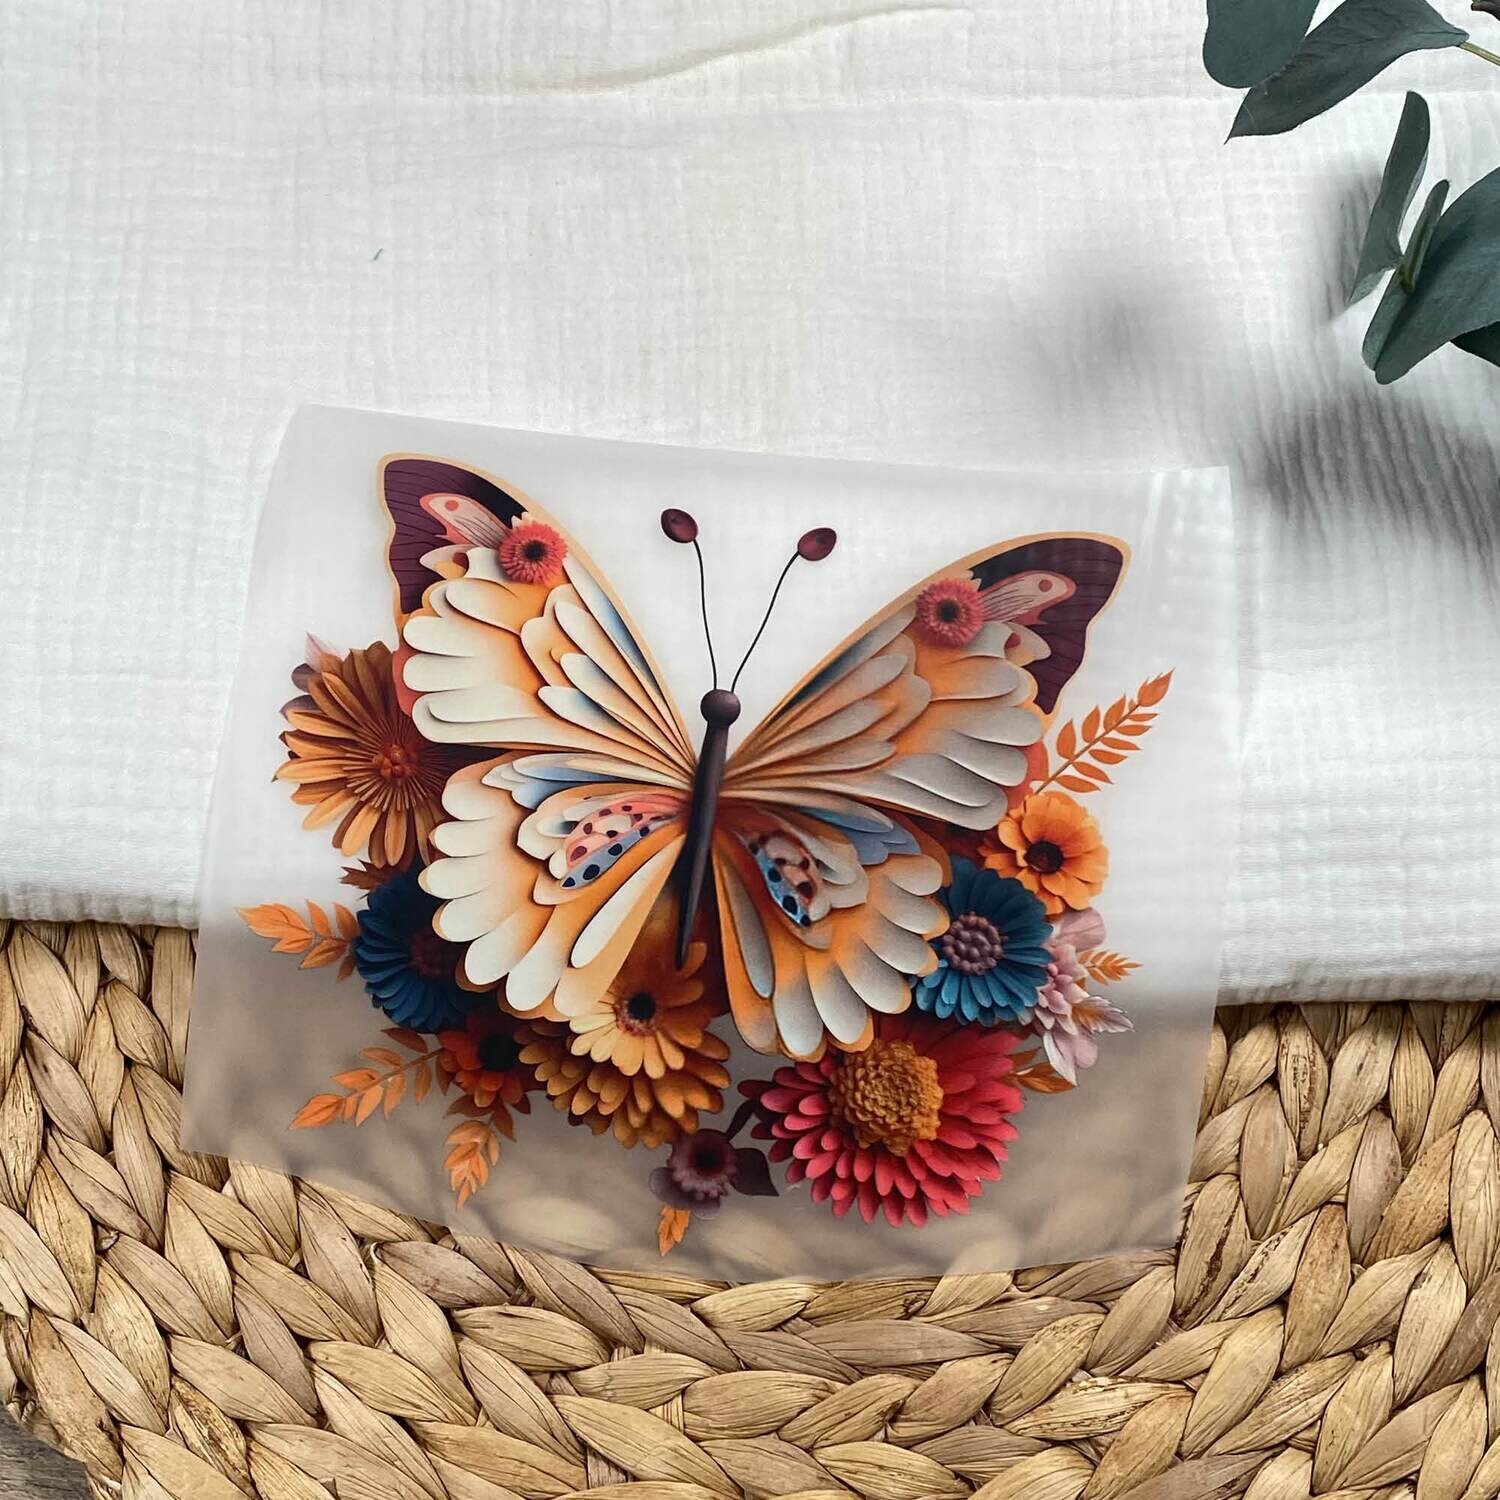 Bügelbild Schmetterling 2 18 cm x 15 cm (BxH)